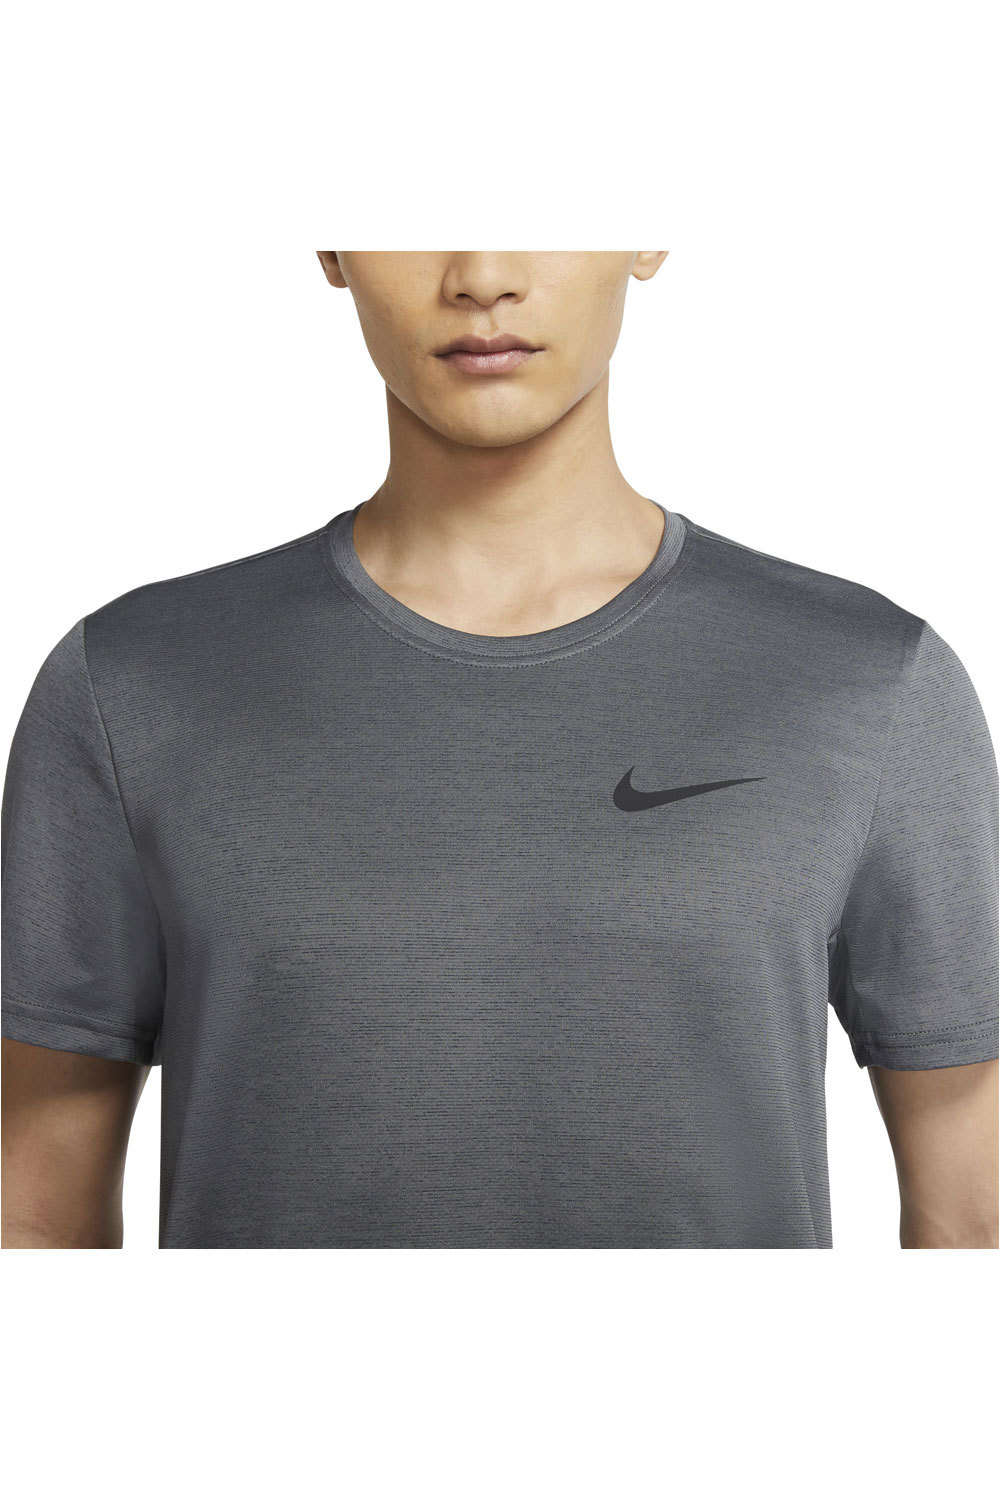 Nike camiseta fitness hombre M NK DF SUPERSET TOP SS vista detalle